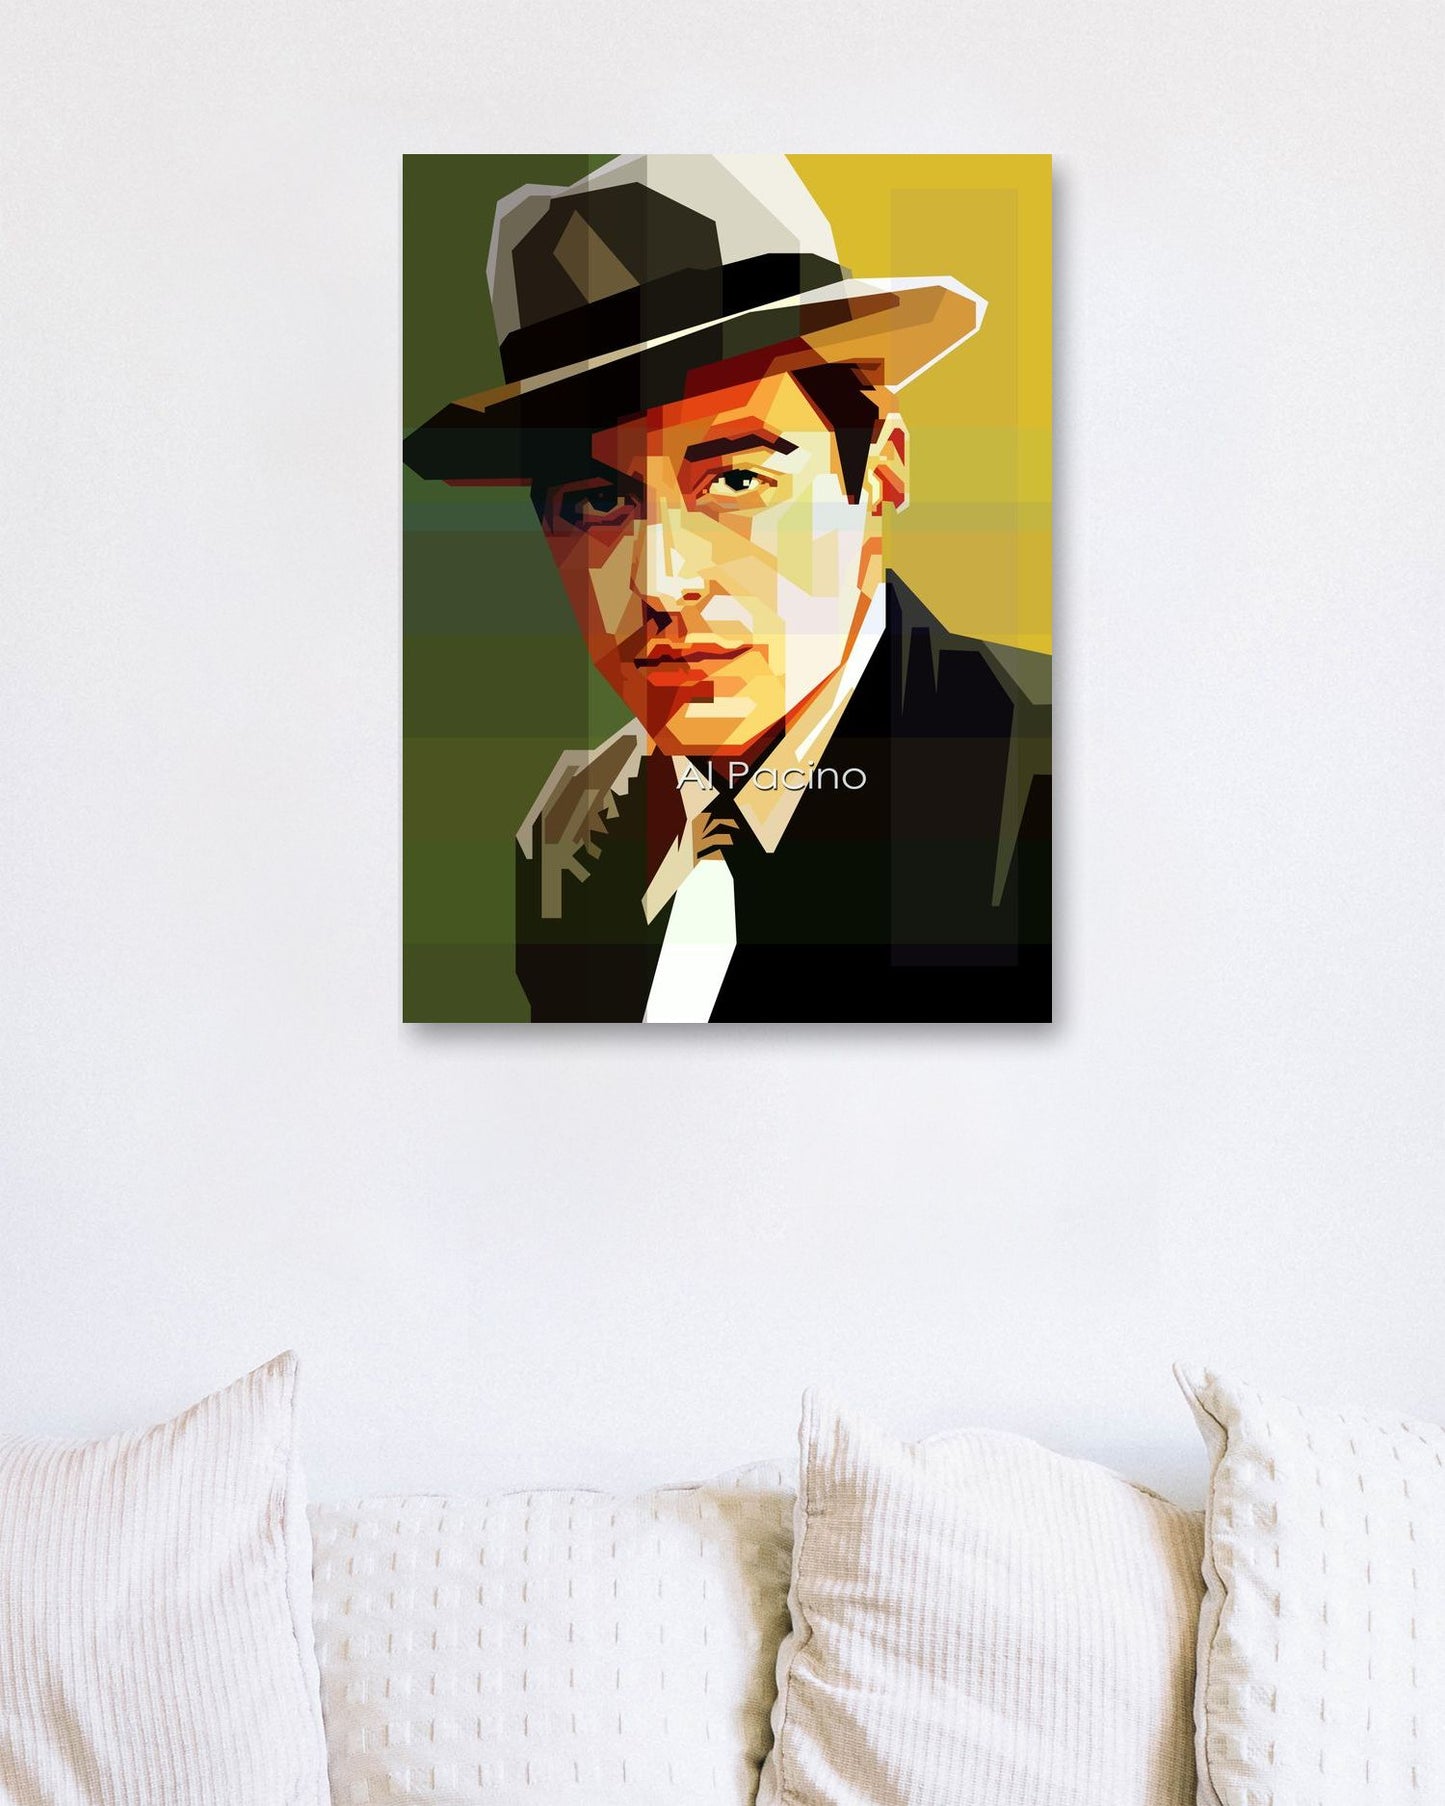 Al Pacino Vintage Portrait - @Artkreator